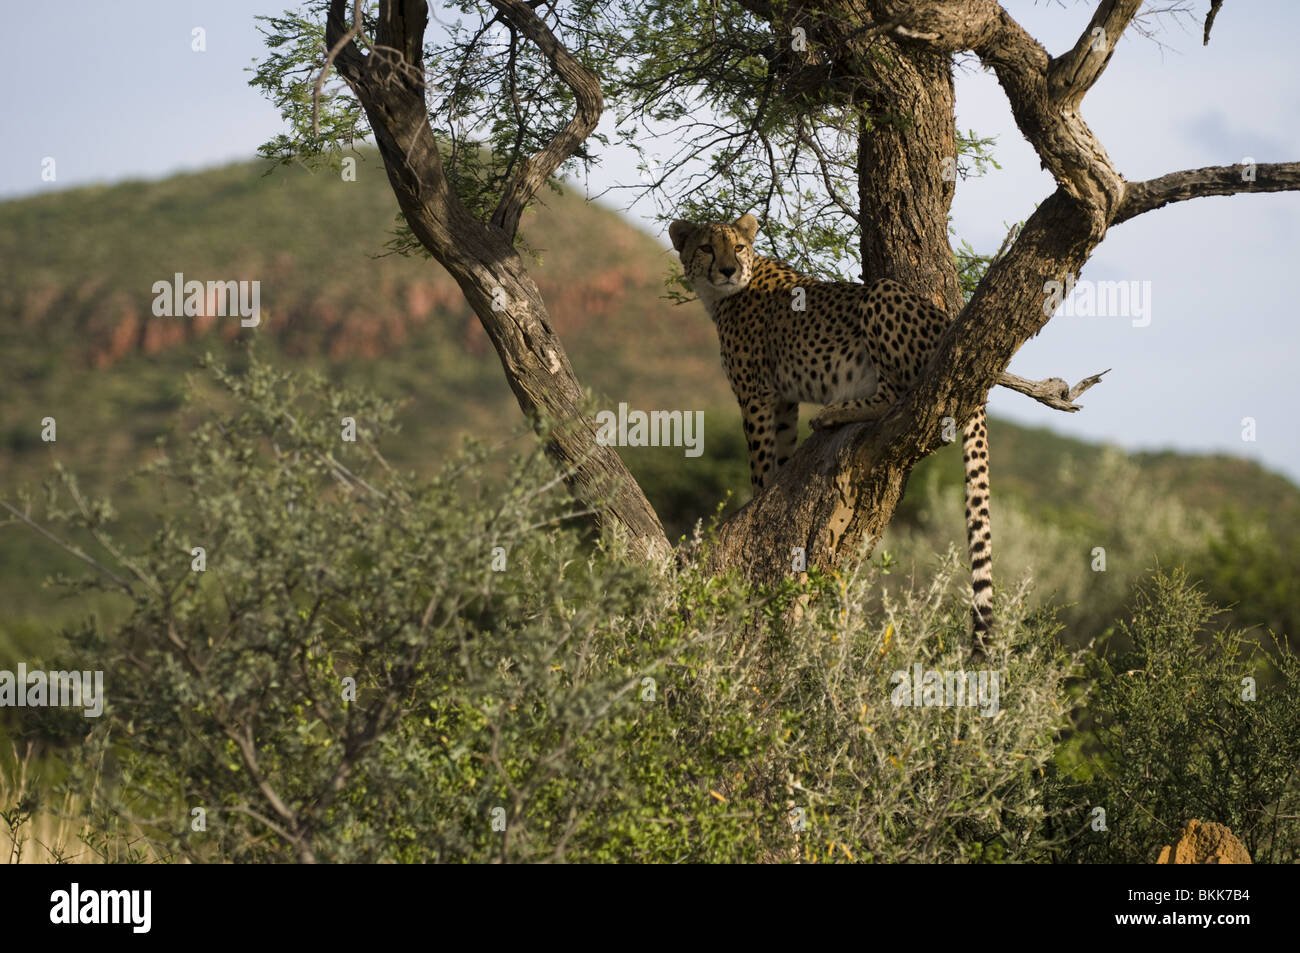 Cheetah using a tree to survey it's surroundings, Okonjima, Namibia. Stock Photo